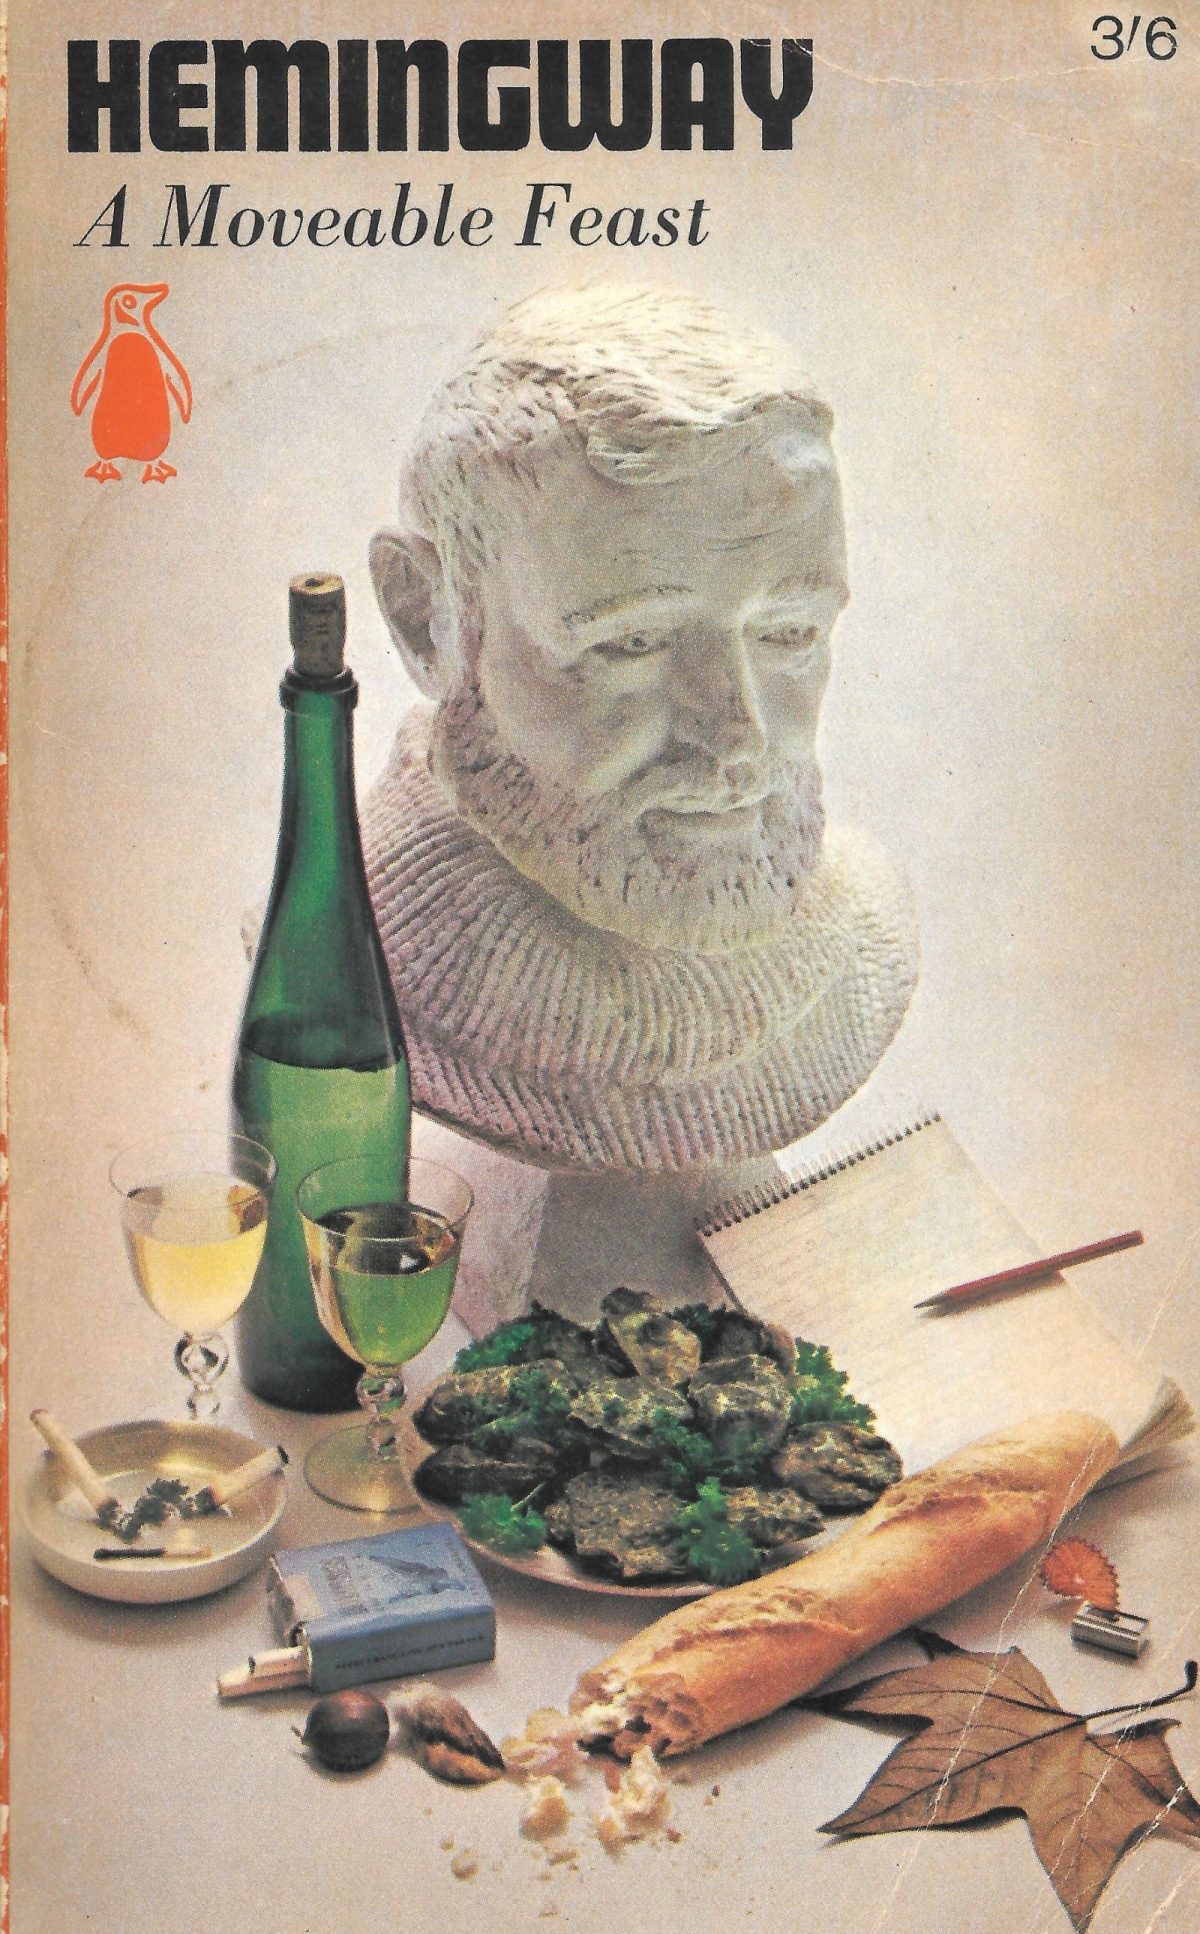 Ernest Hemingway, books, literature, design, book covers, Dennis Rolfe